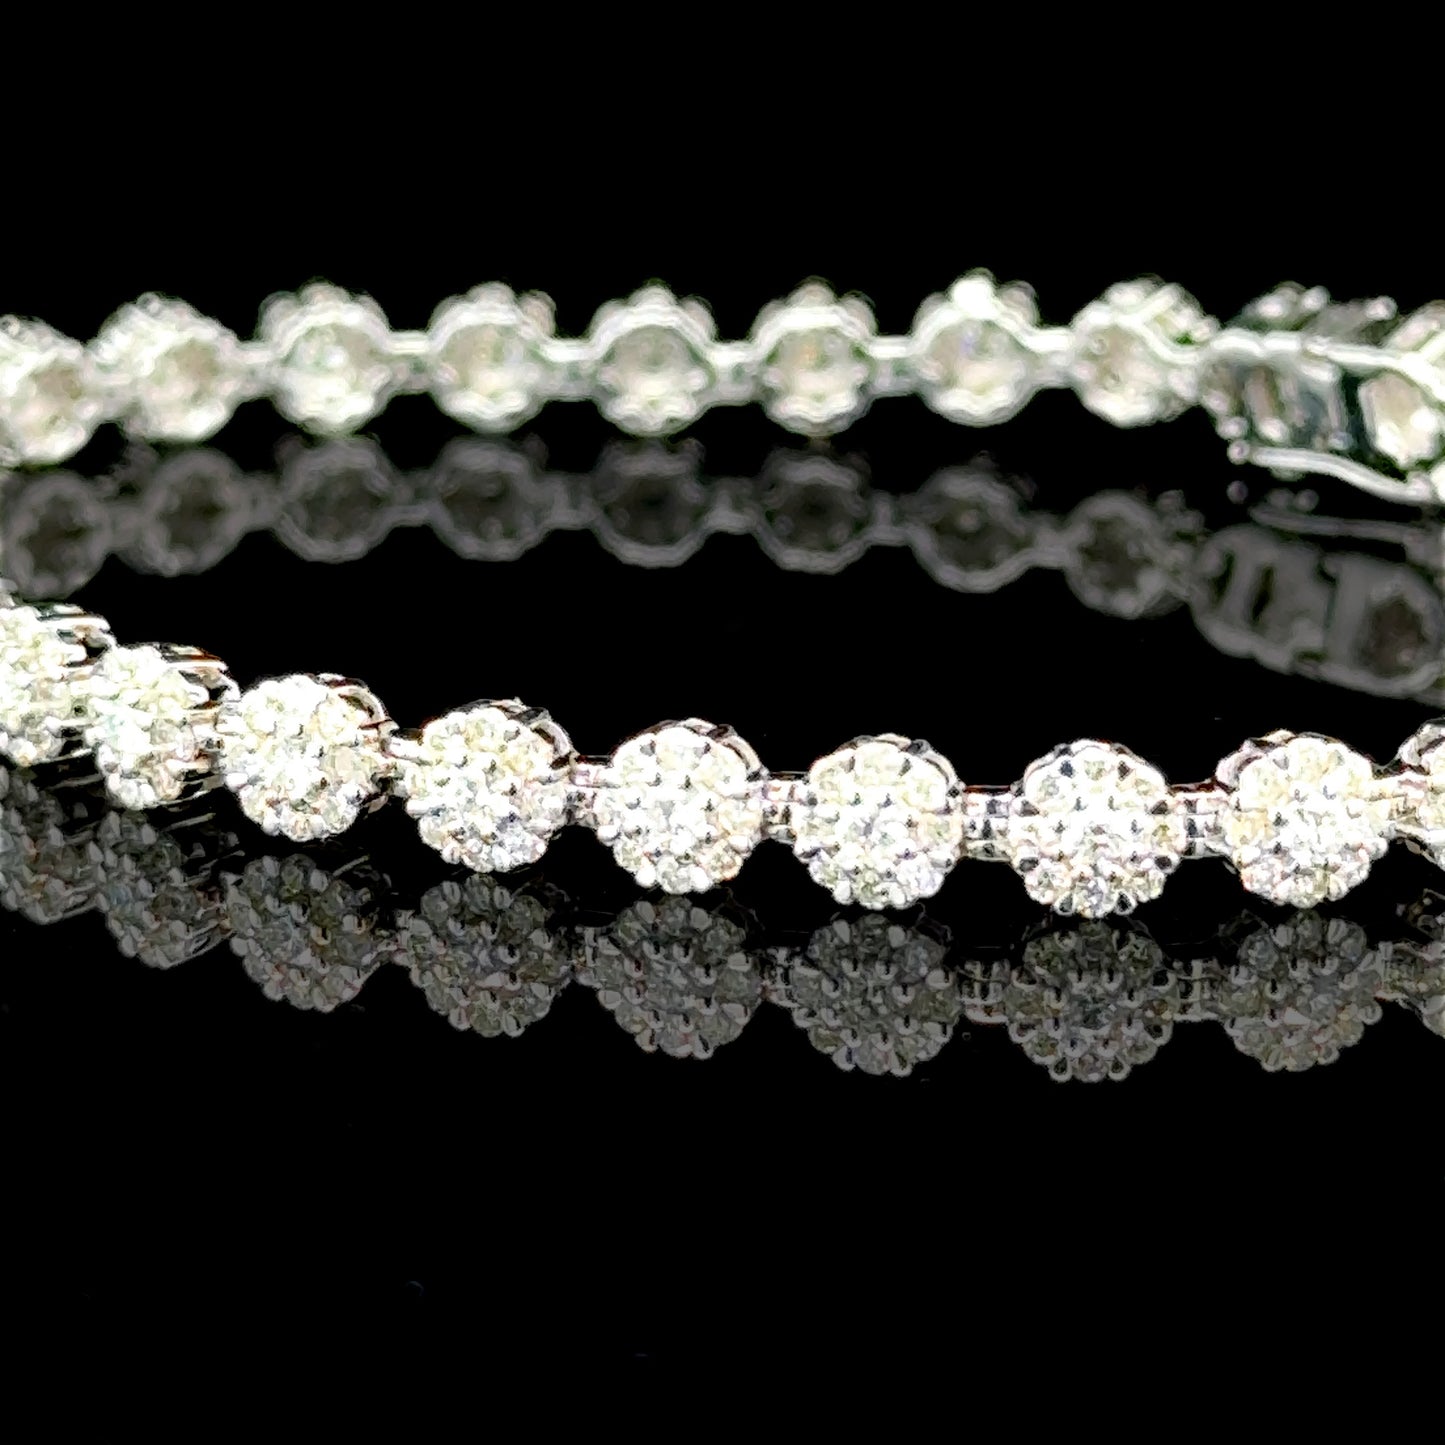 10K white gold bracelet with floral diamond setting, 2 7/8ct diamonds.